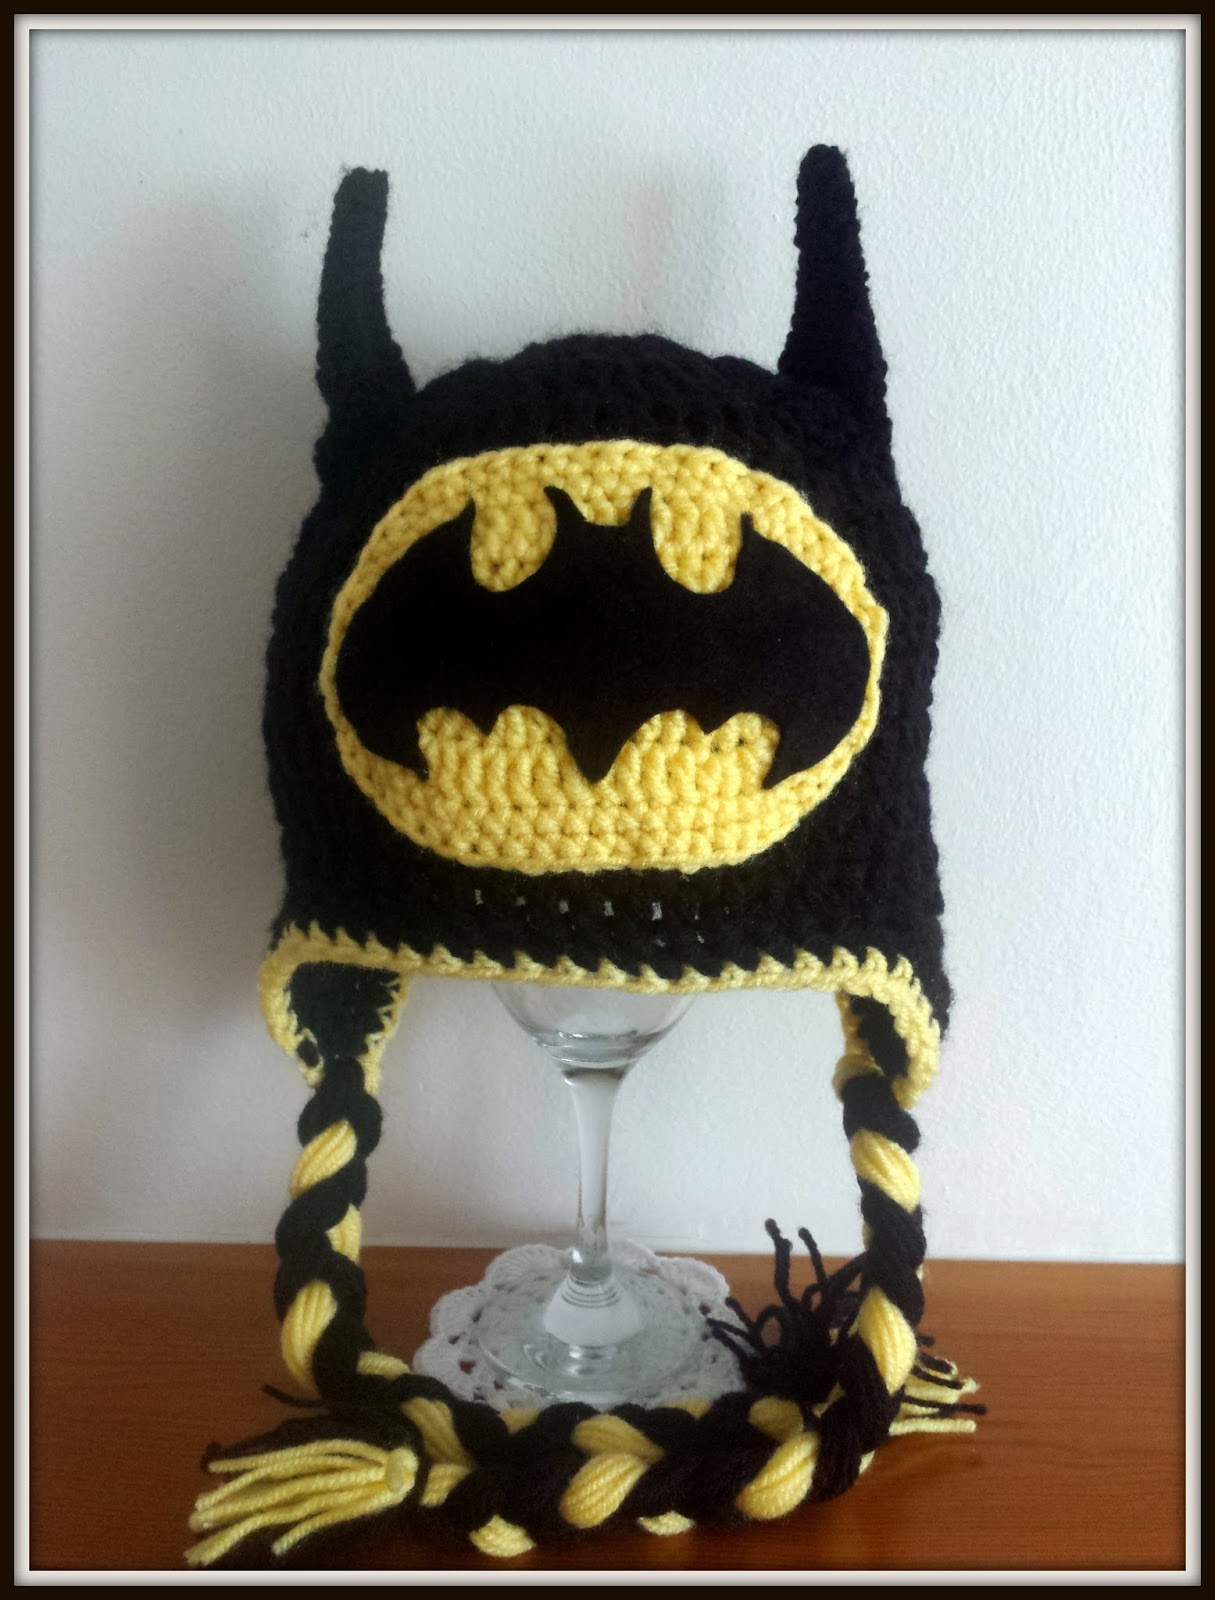 Crochet Batman Hat Pattern Batman Crochet Handmade Kids Ba Hat Size From 3 6 Months To Adult